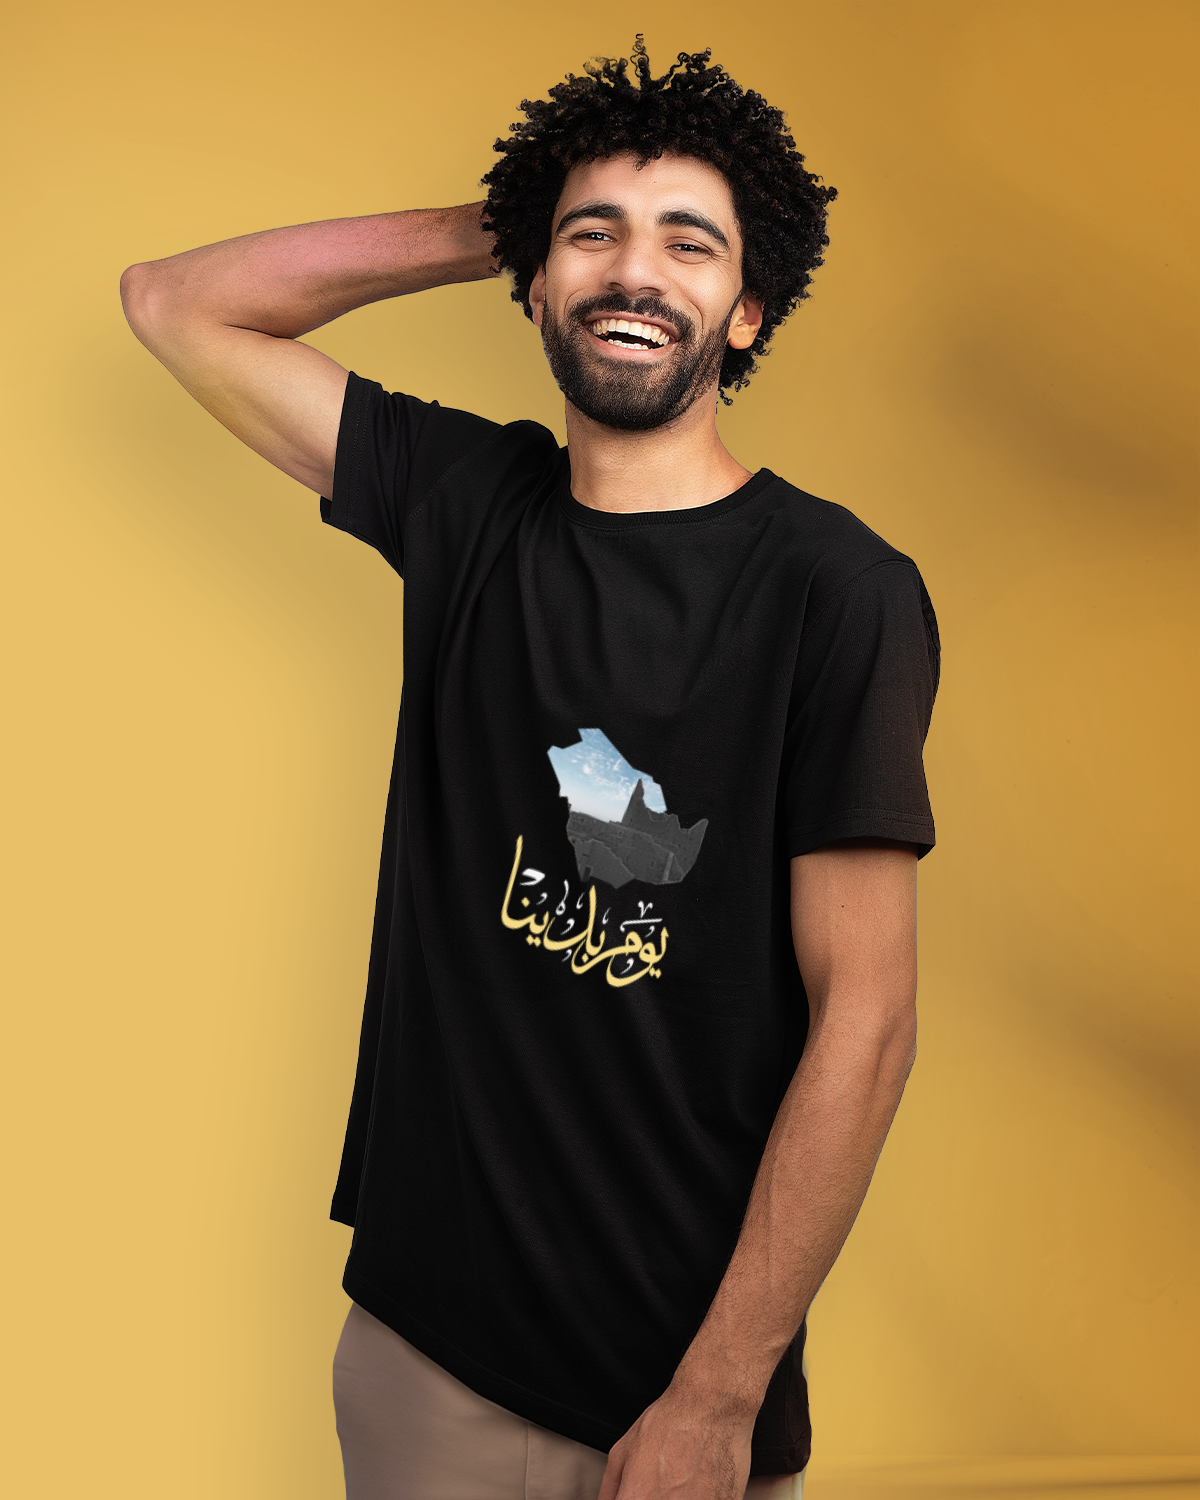 Men's Foundation Day T-shirt (Yawm Badina)